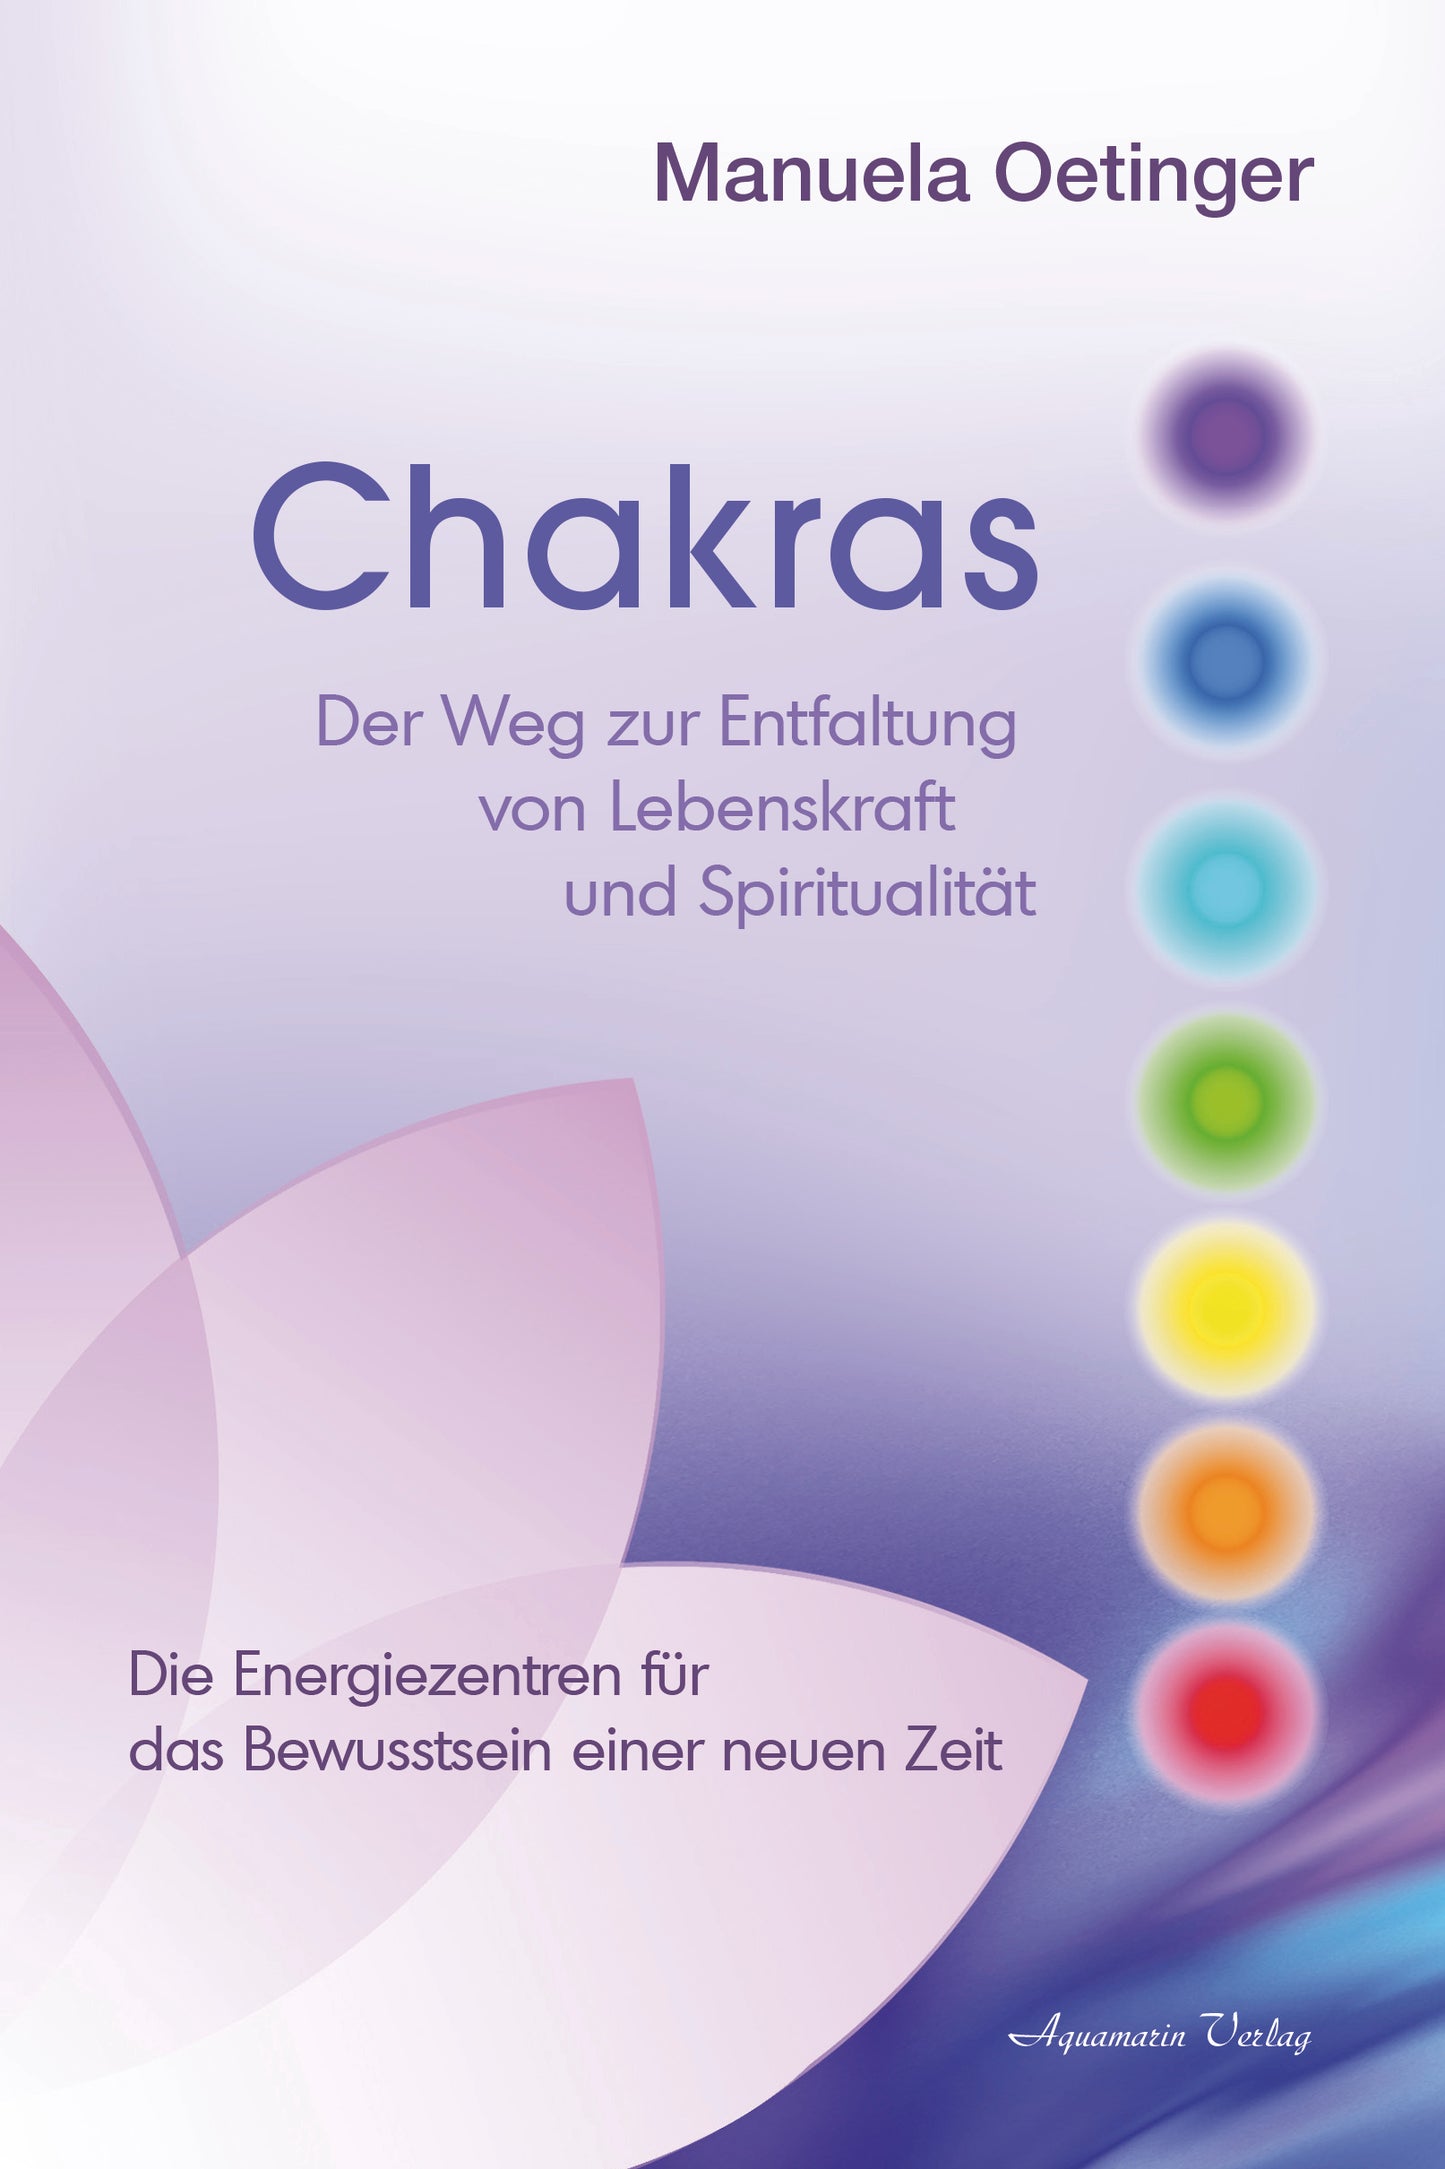 Chakras (Manuela Oetinger)